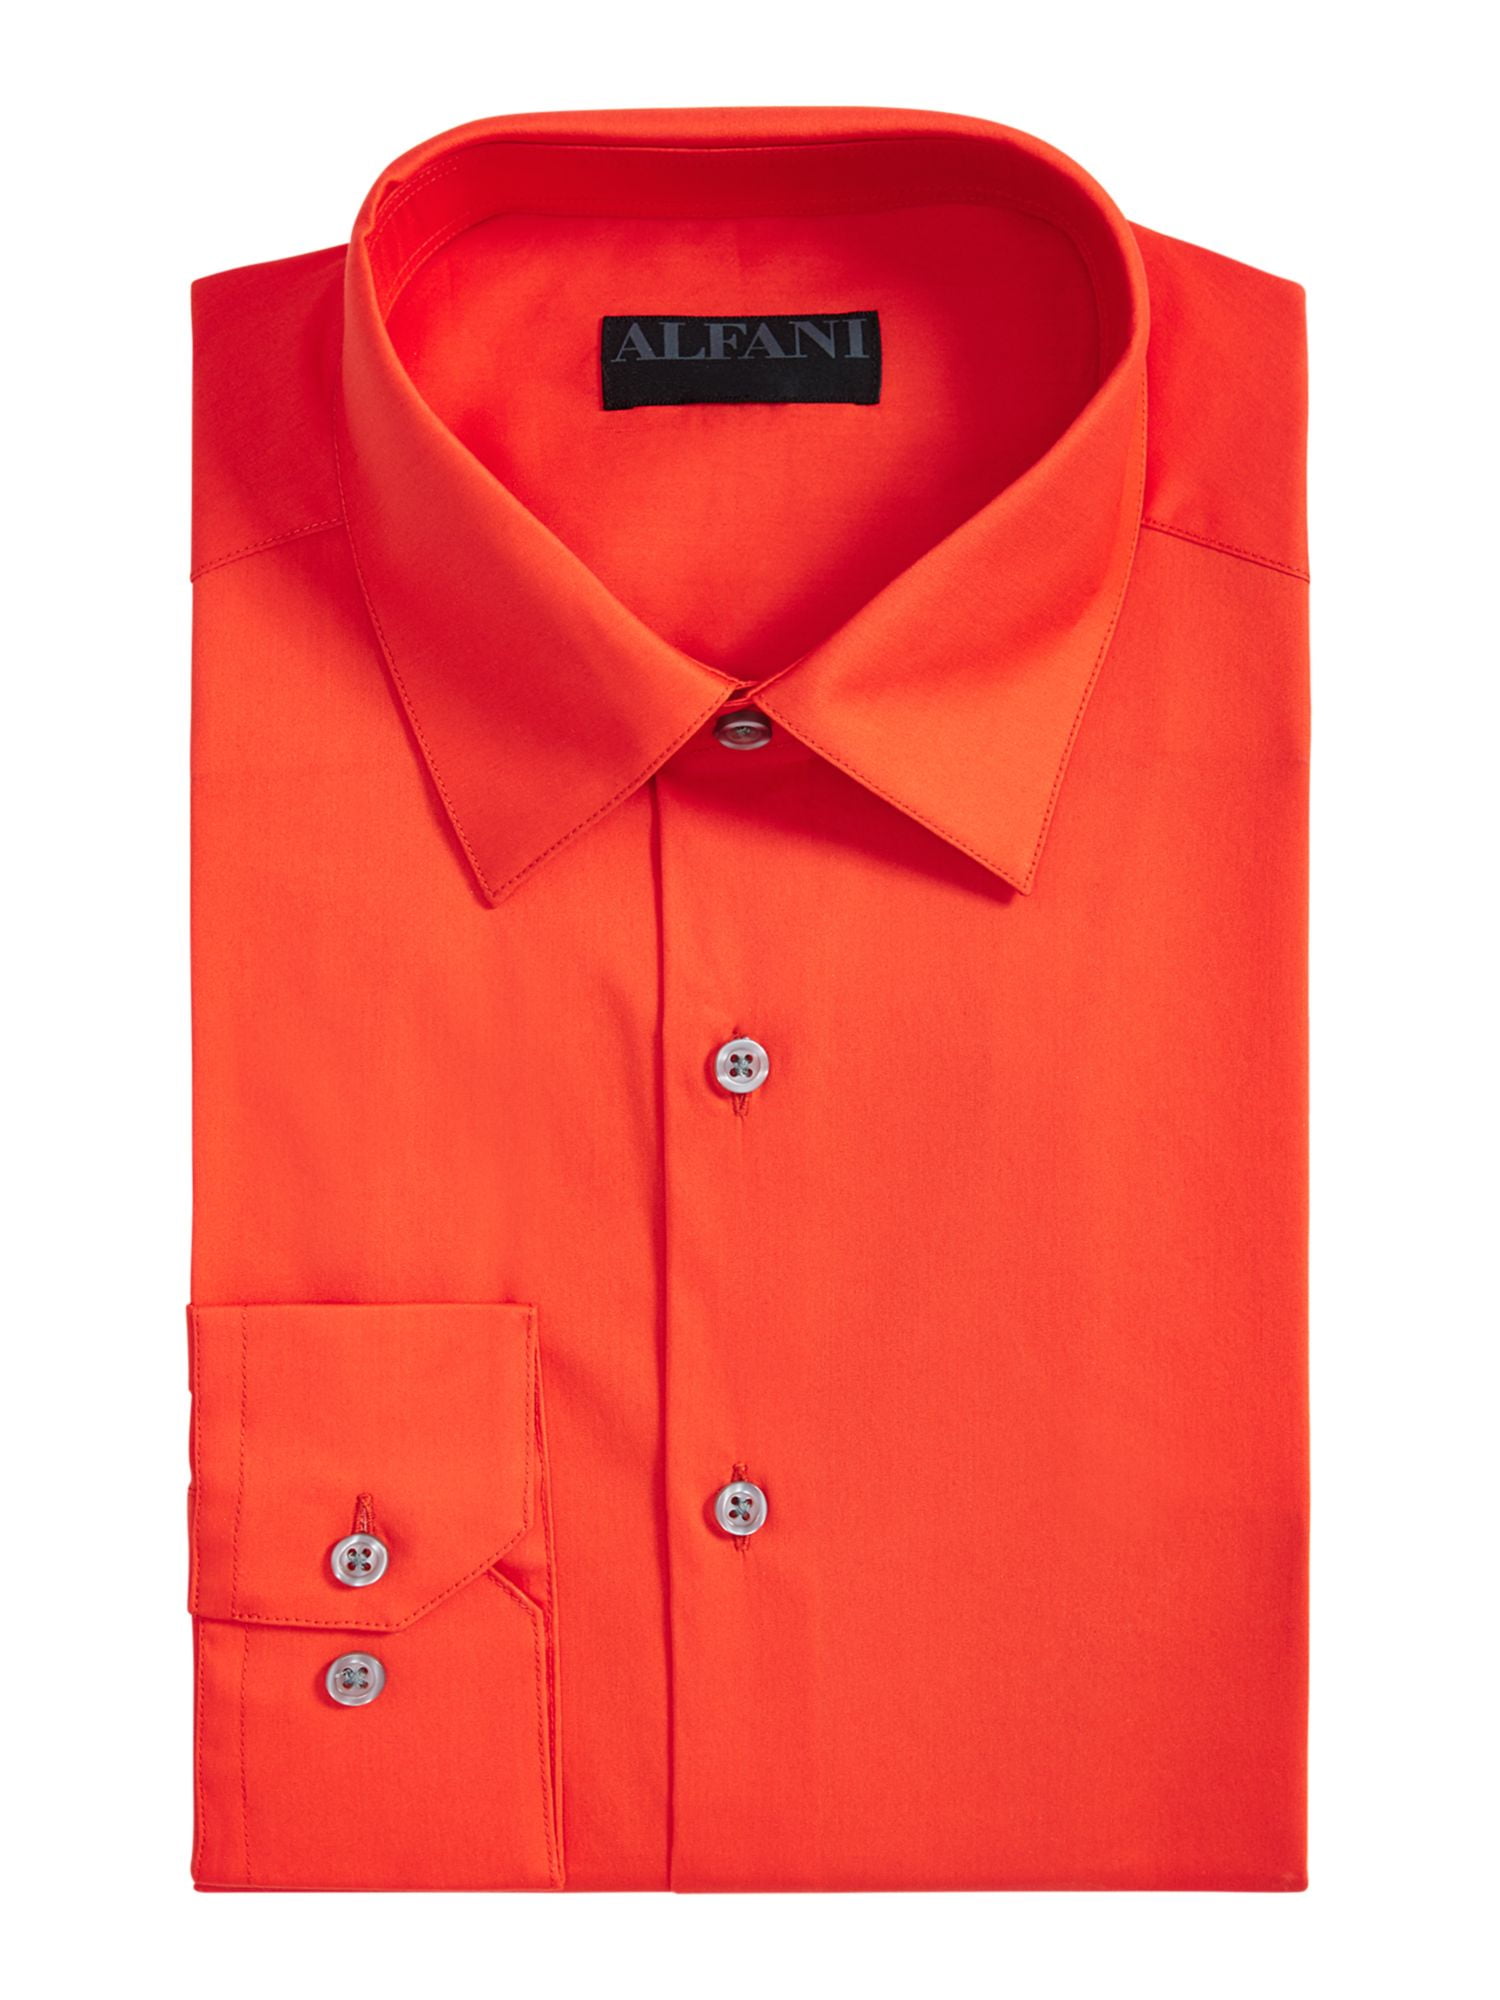 ALFANI Mens Orange Collared Dress Shirt ...